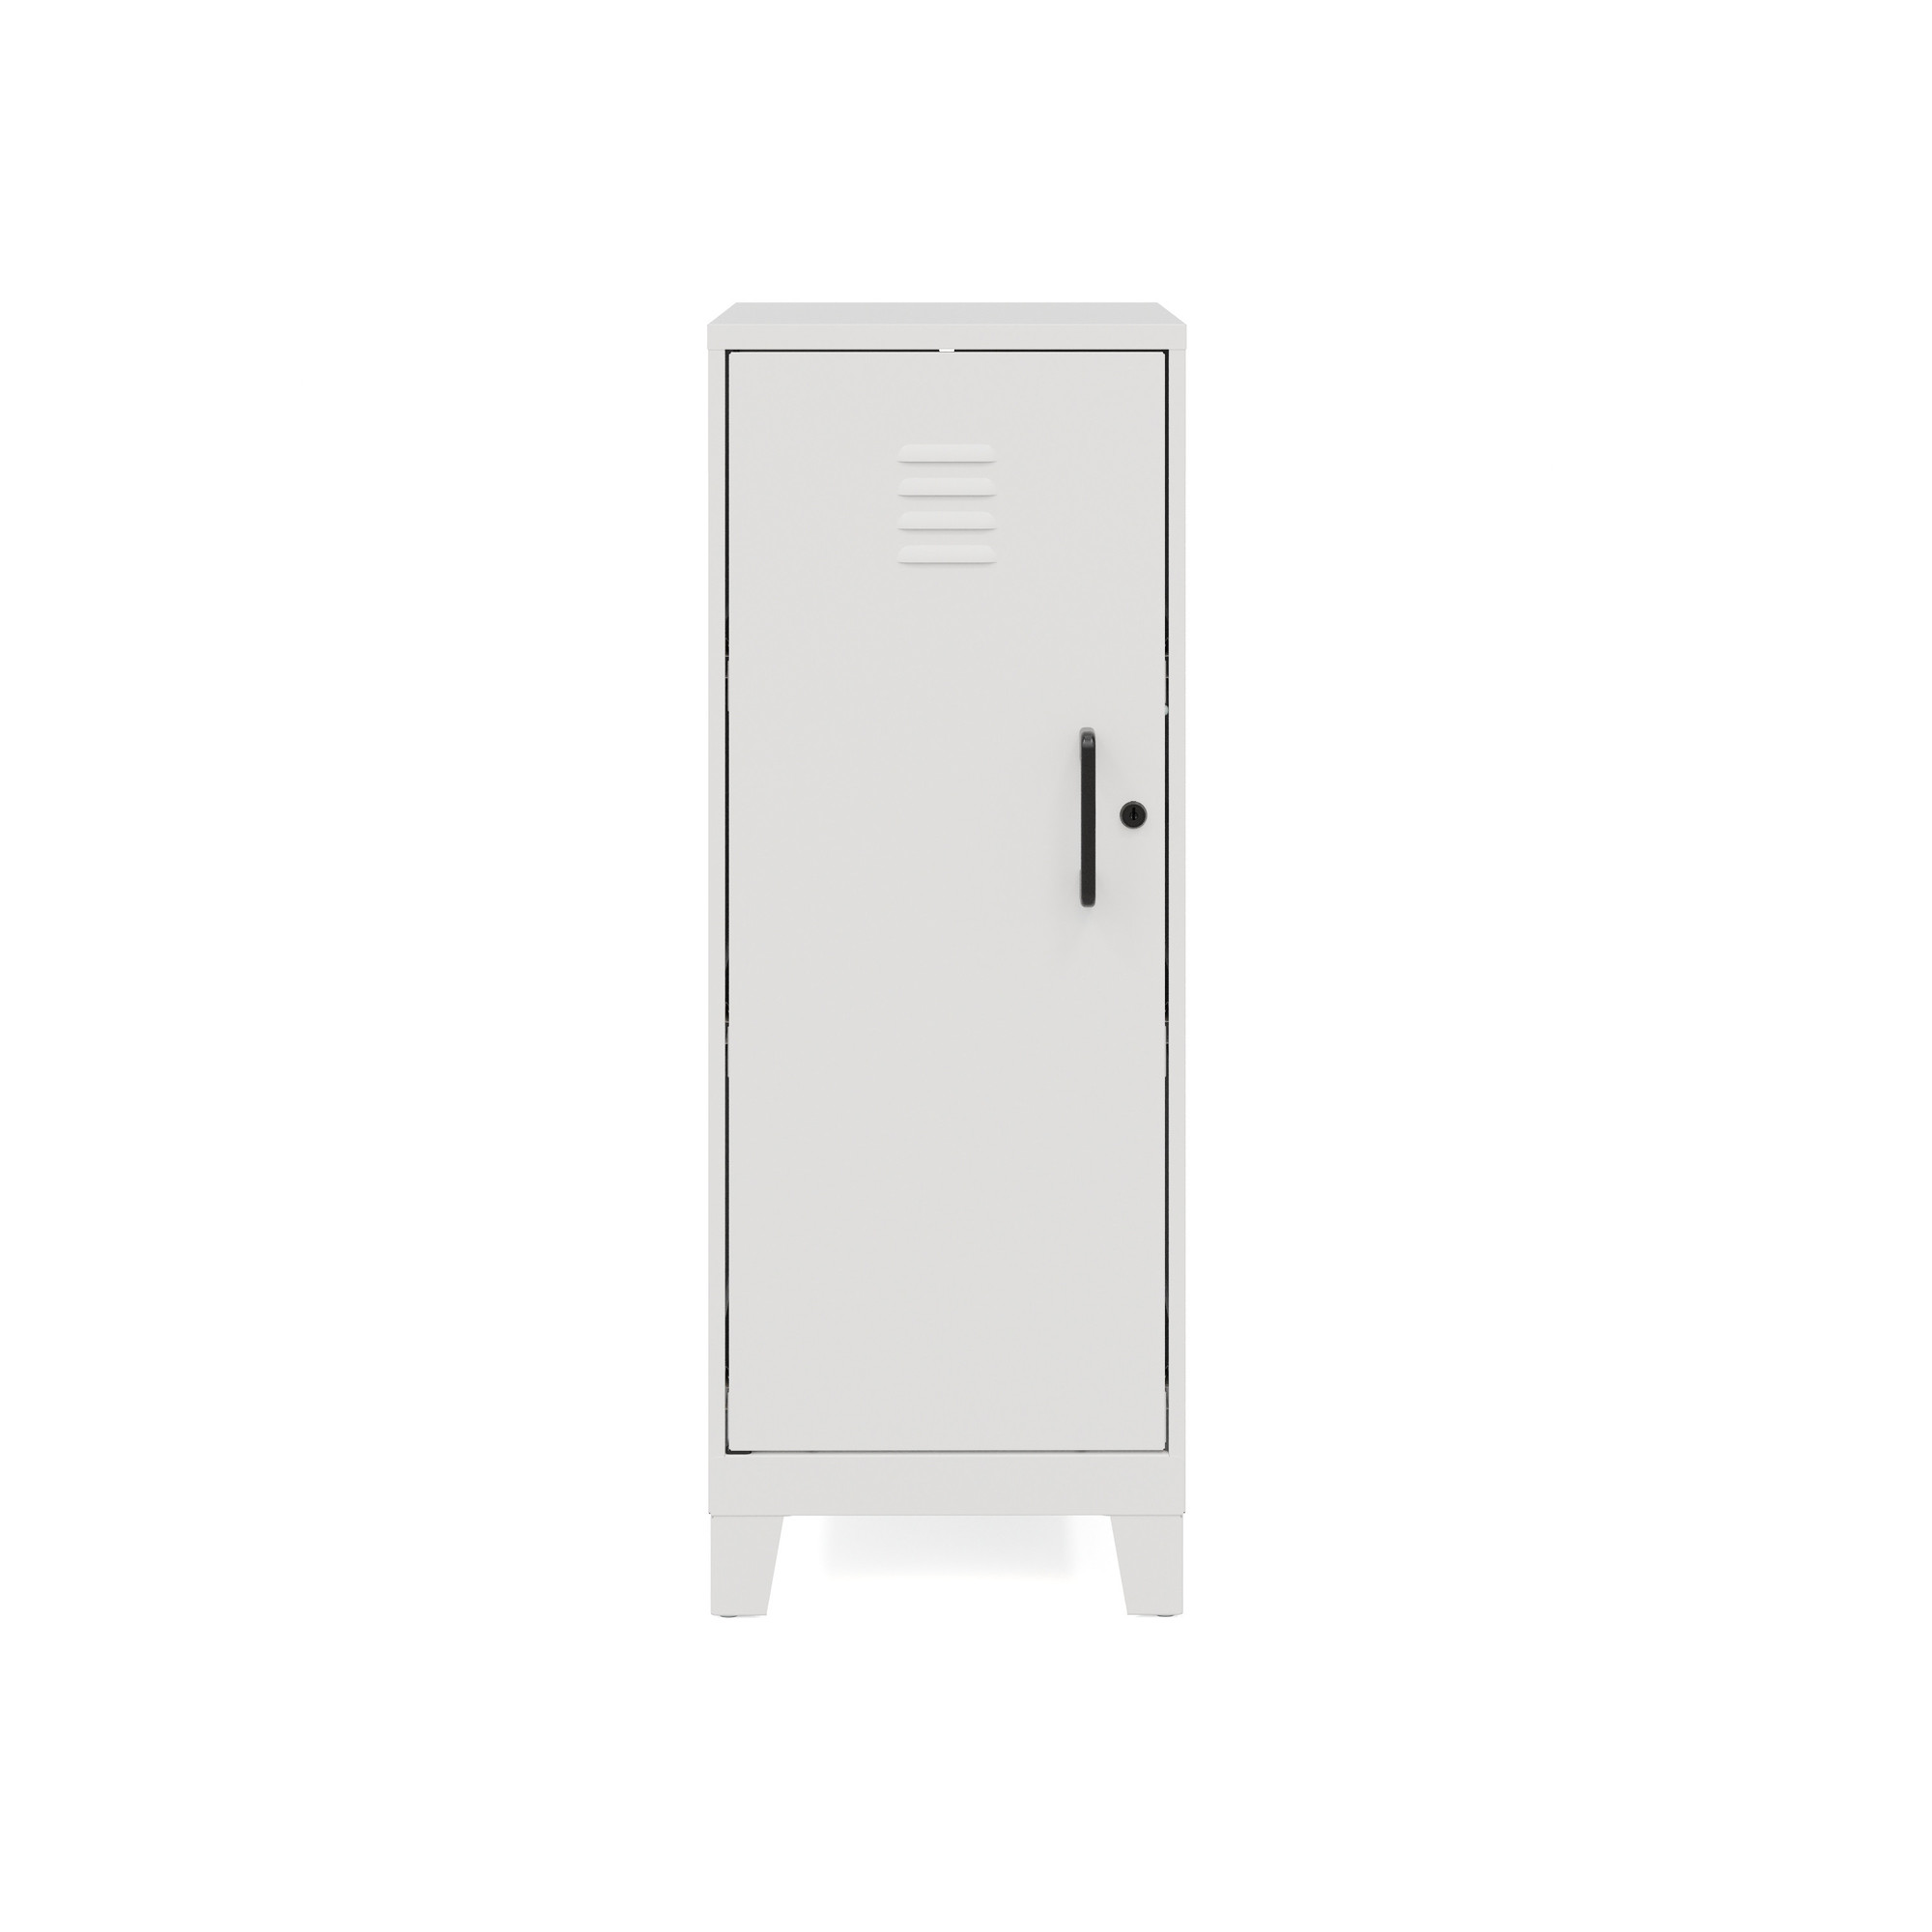 Hirsh Industries, 3 Shelf Storage Locker Cabinet, Height 38.5 in, Width 14.25 in, Color Off White, Model 25223